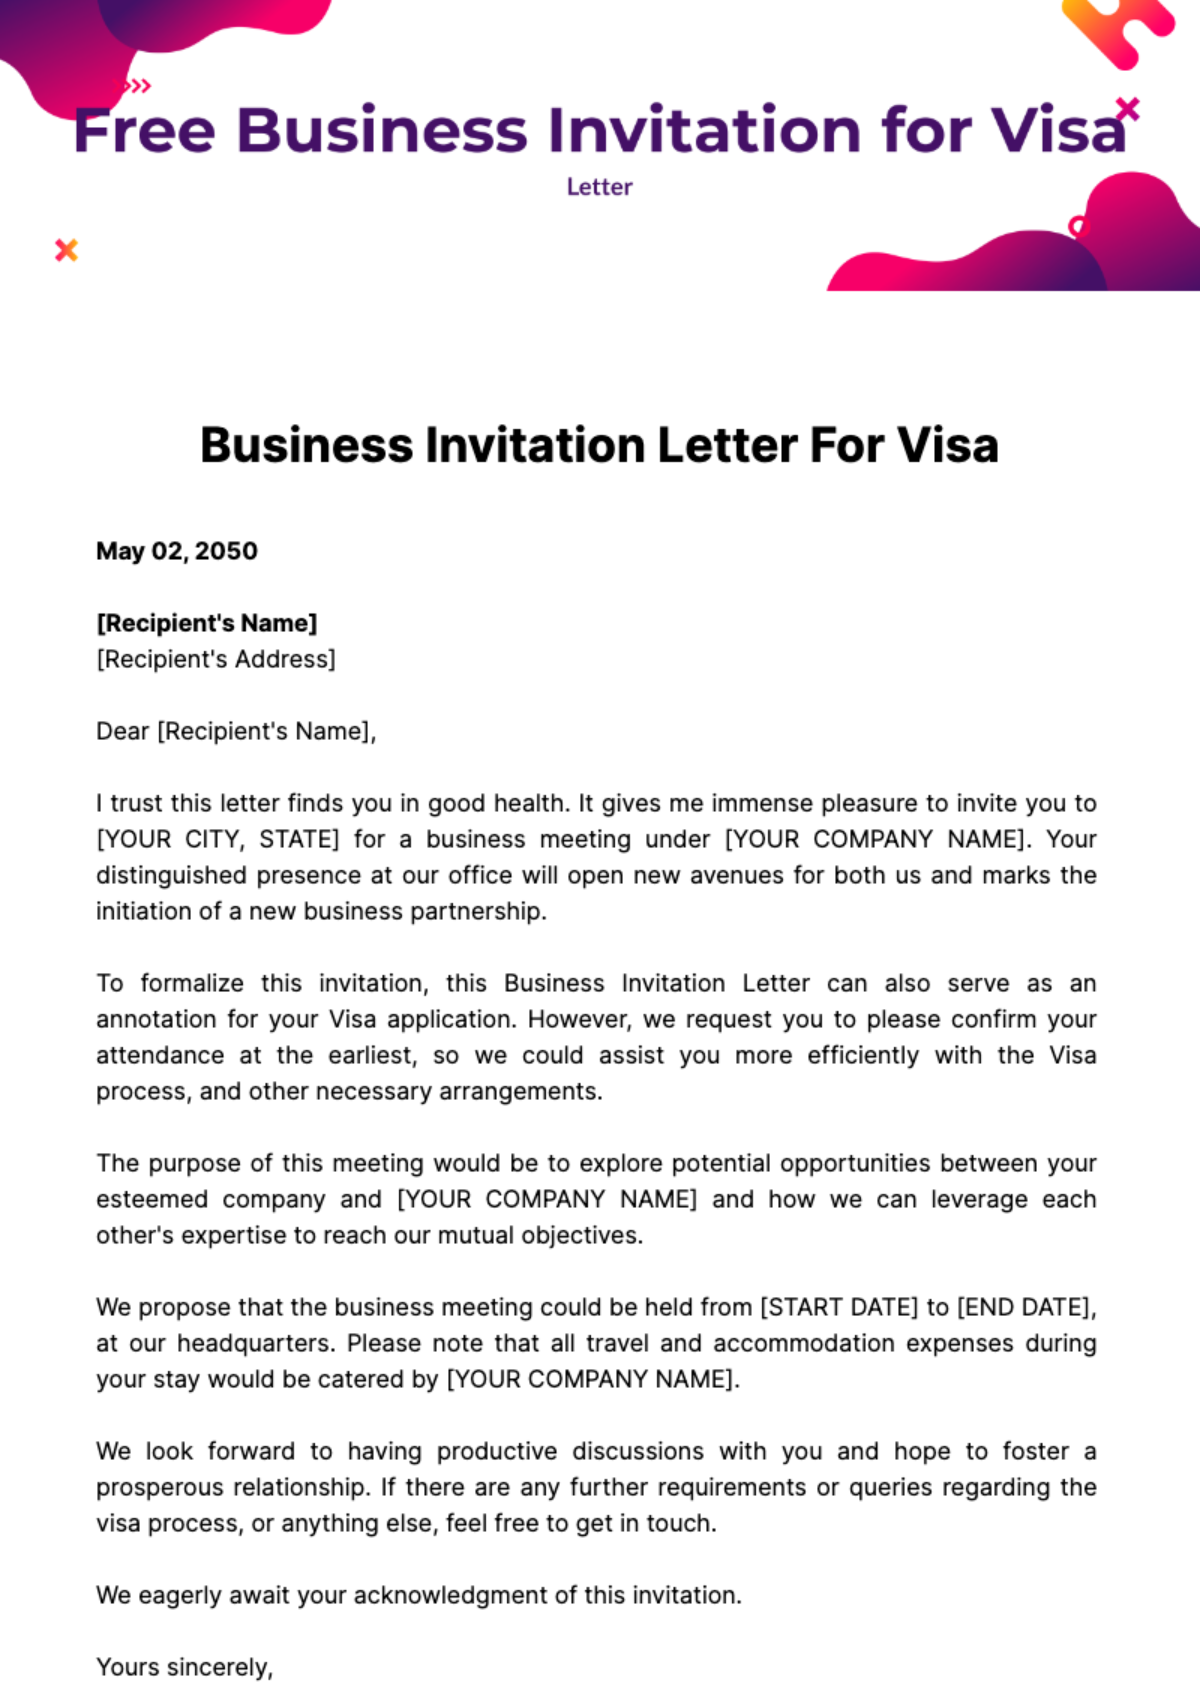 Free Business Invitation Letter for Visa Template